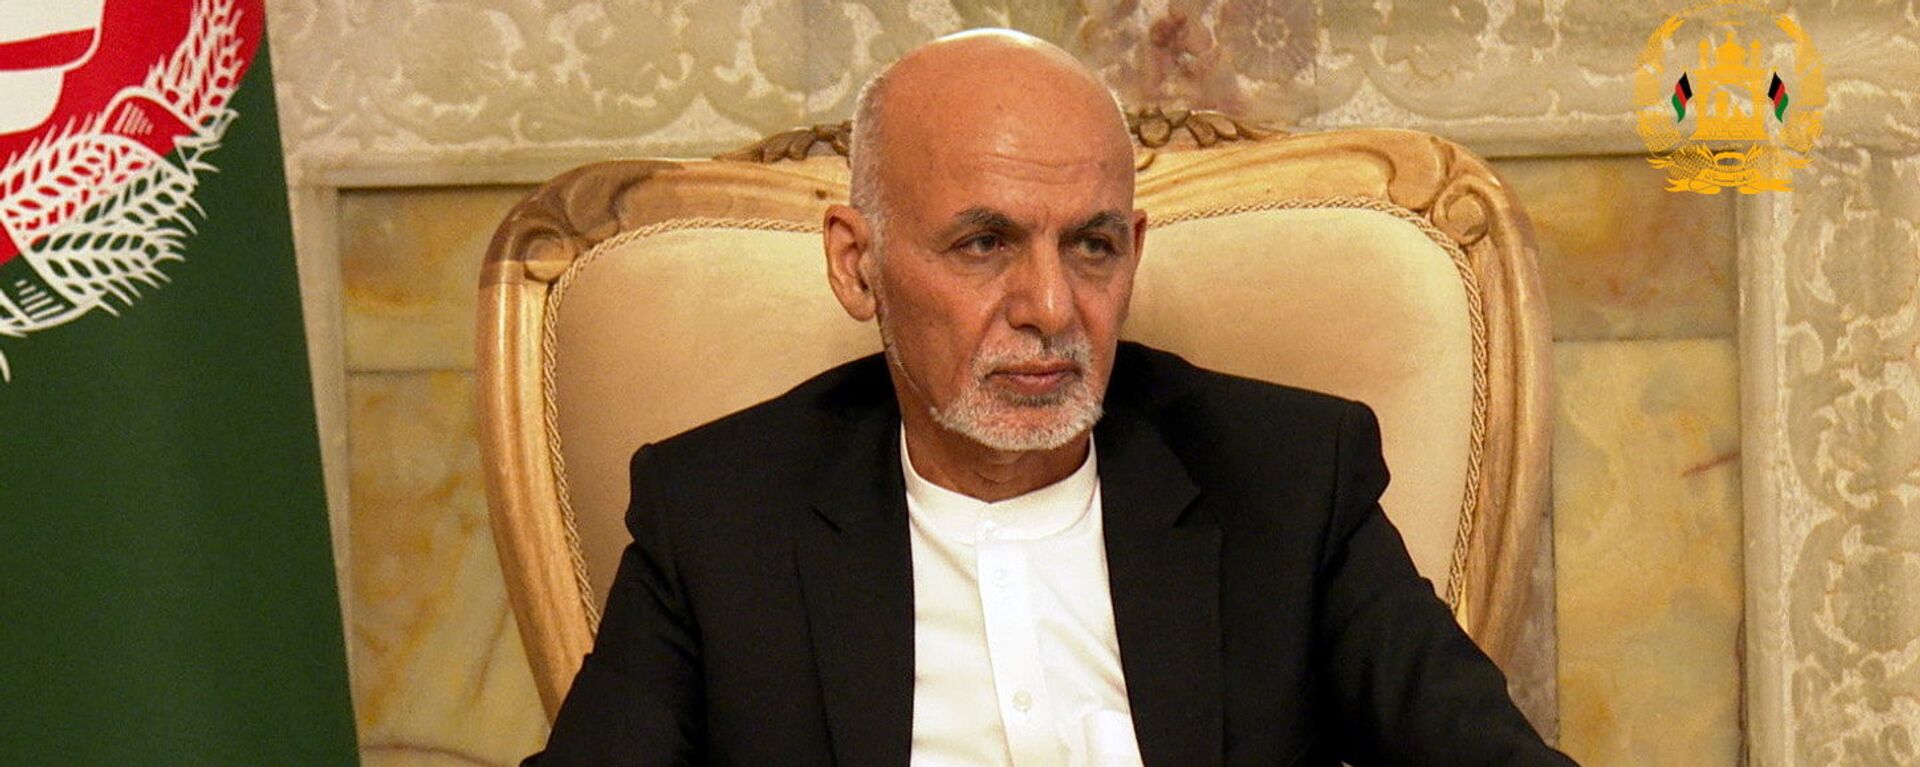 Afghanistan's President Ashraf Ghani attends a security meeting in Kabul, Afghanistan August 14, 2021 - Sputnik International, 1920, 08.09.2021